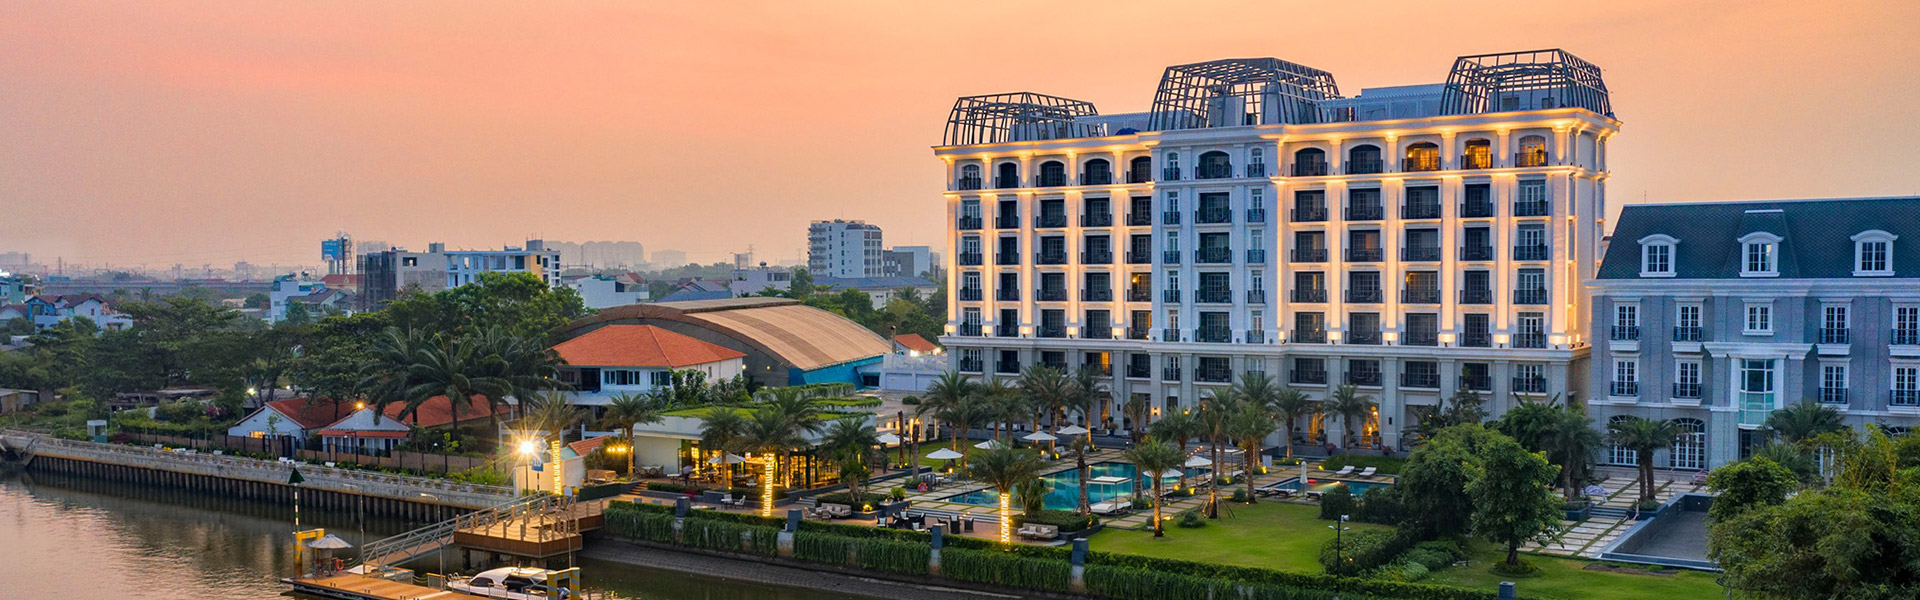 Mia Saigon Luxury Hotel - Saigon River Hotel